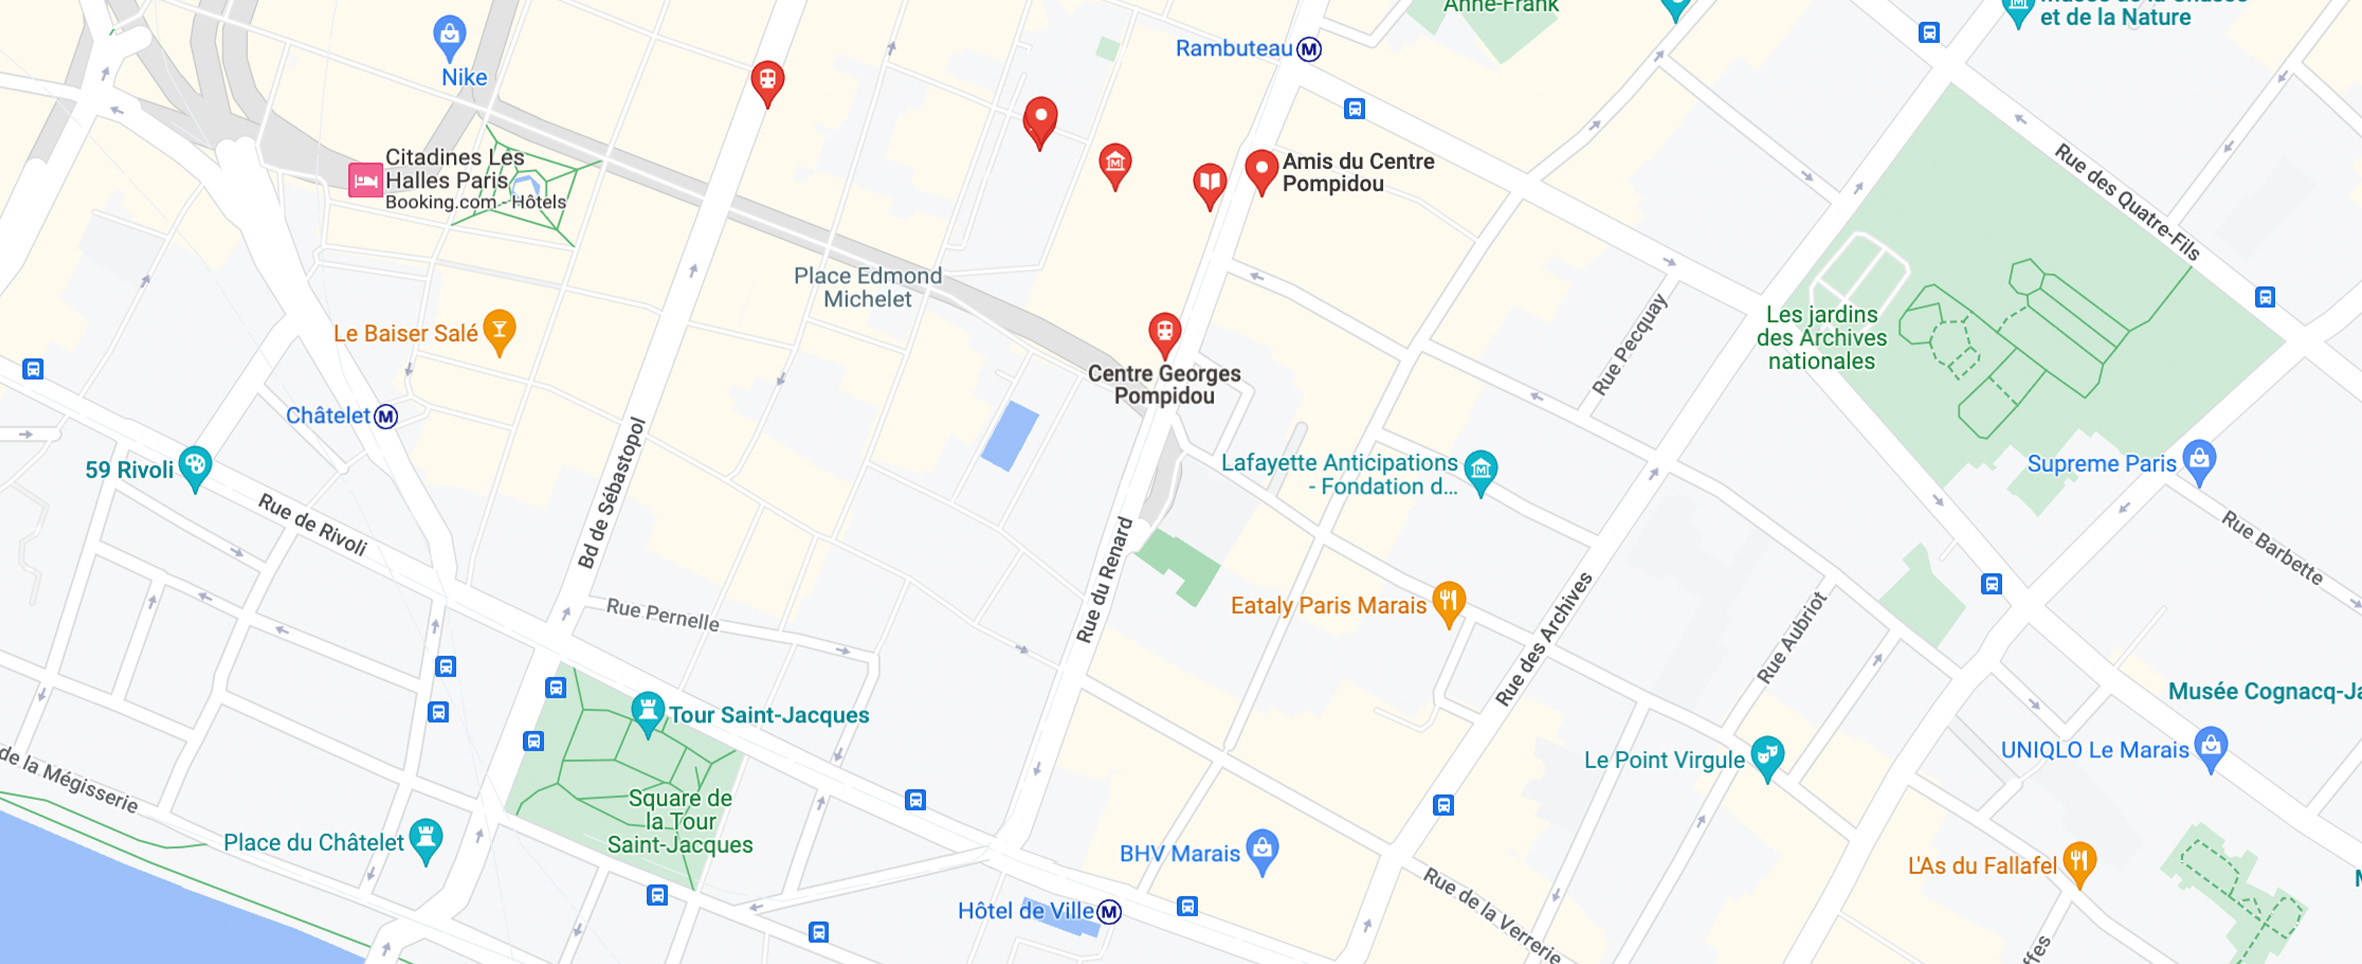 Mapa para llegar al centro Pompidou 